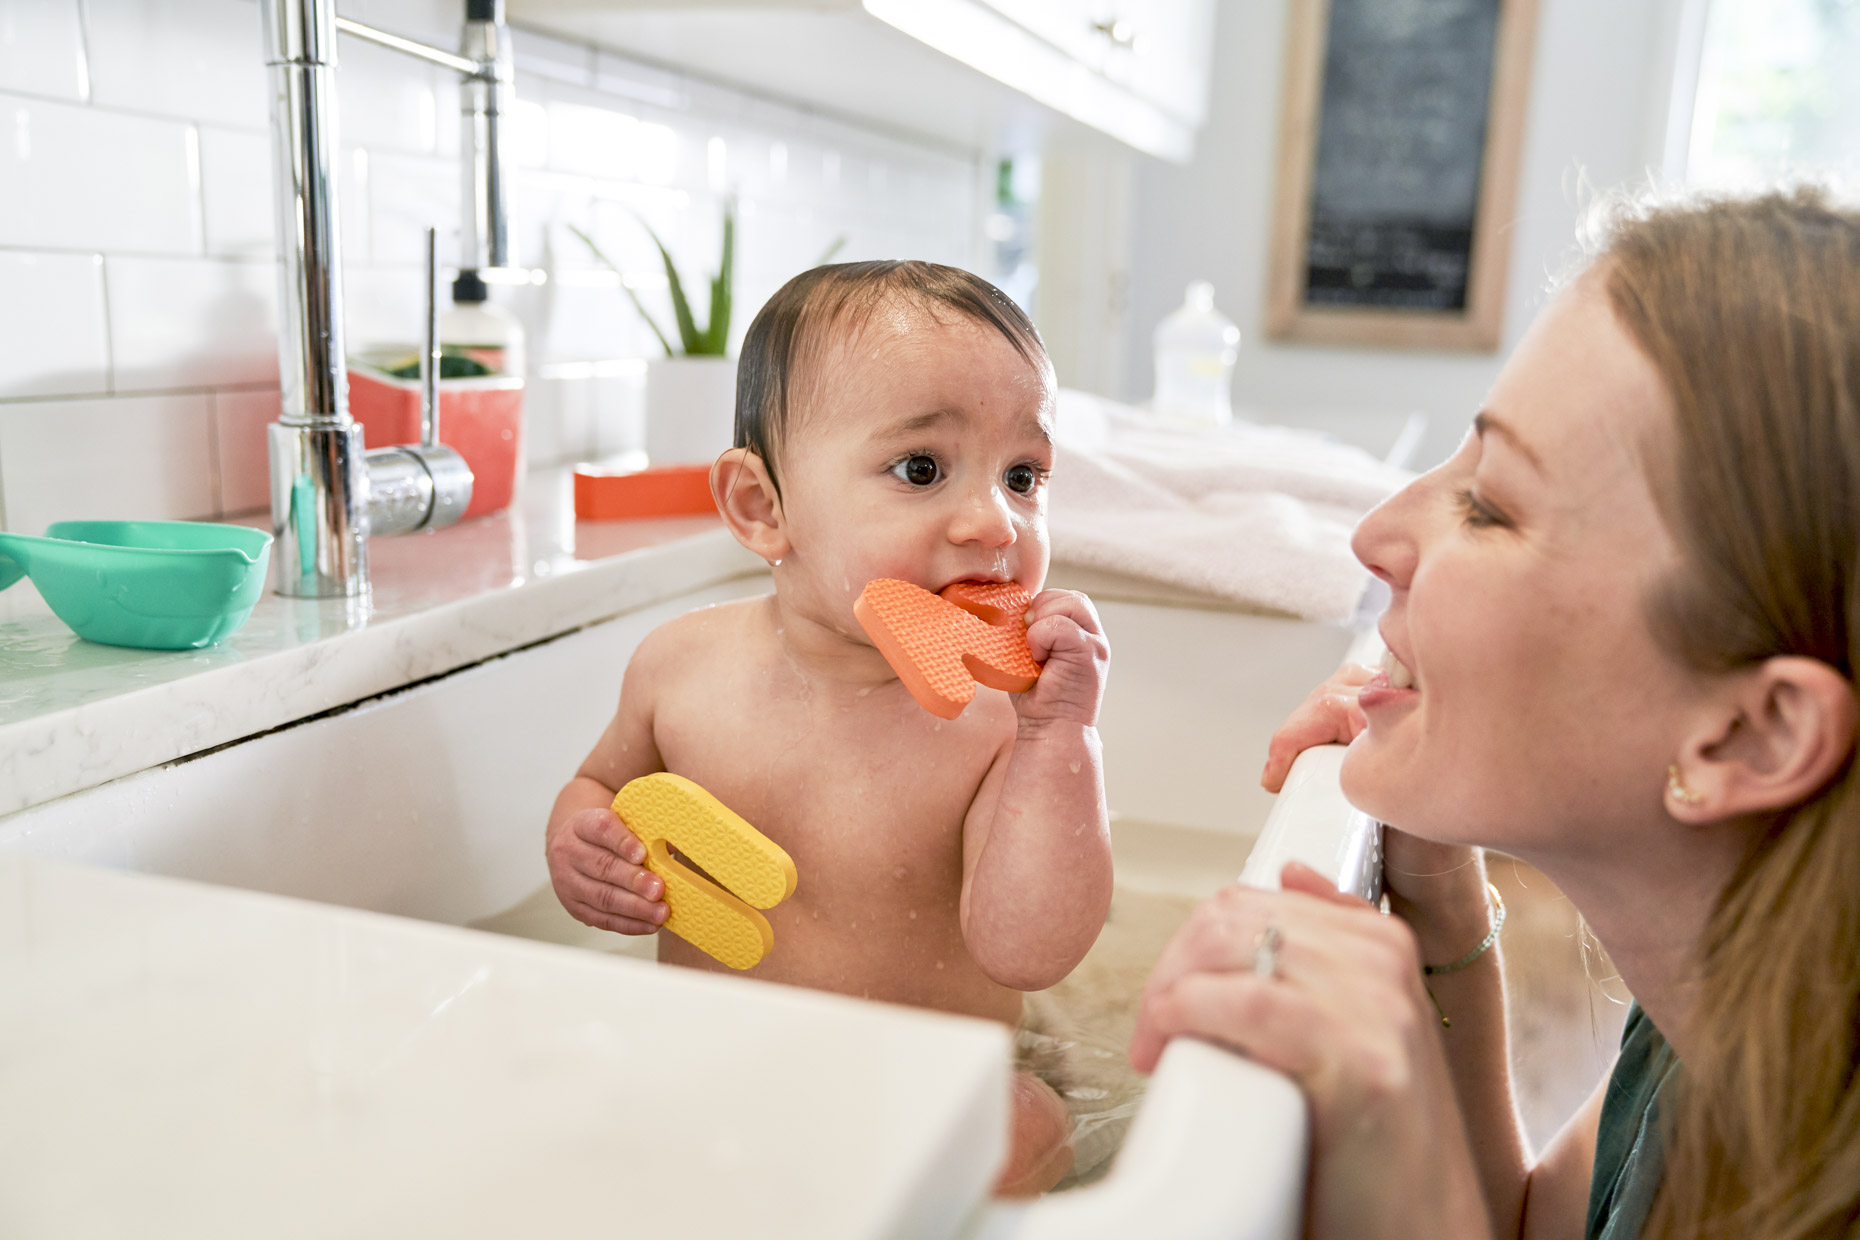 Woman bathing baby in kitchen sink